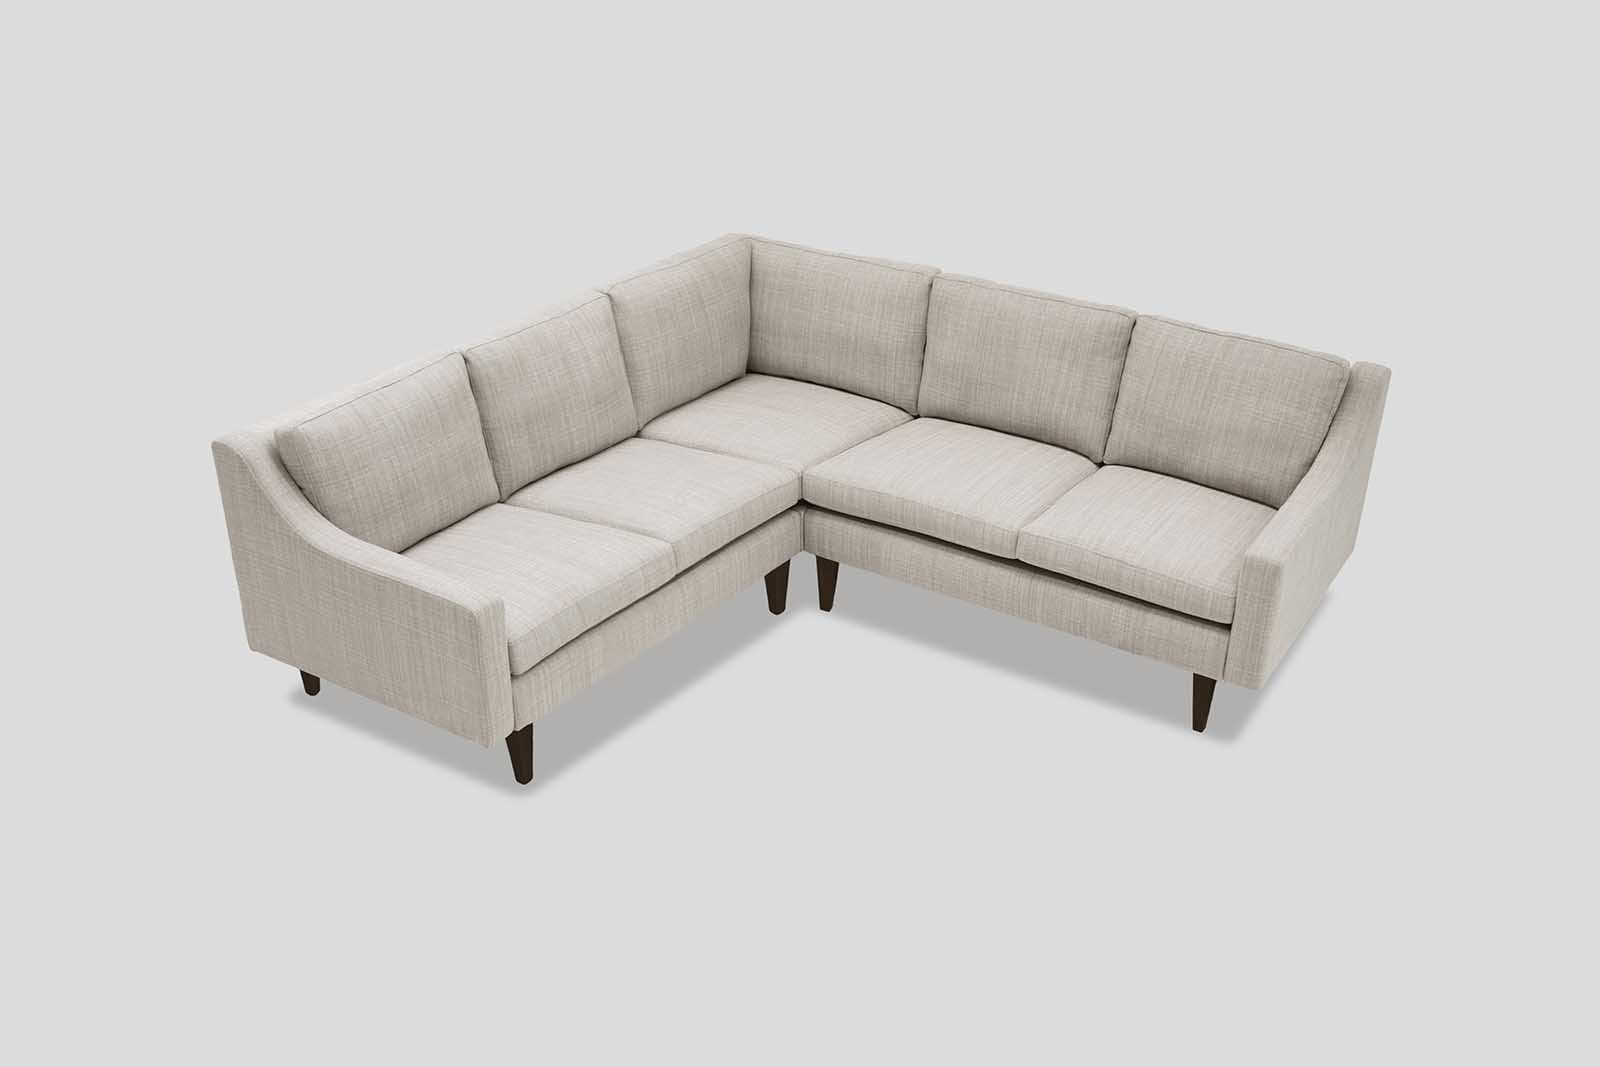 HB02-small-corner-sofa-coconut-2x2-overhead-treacle